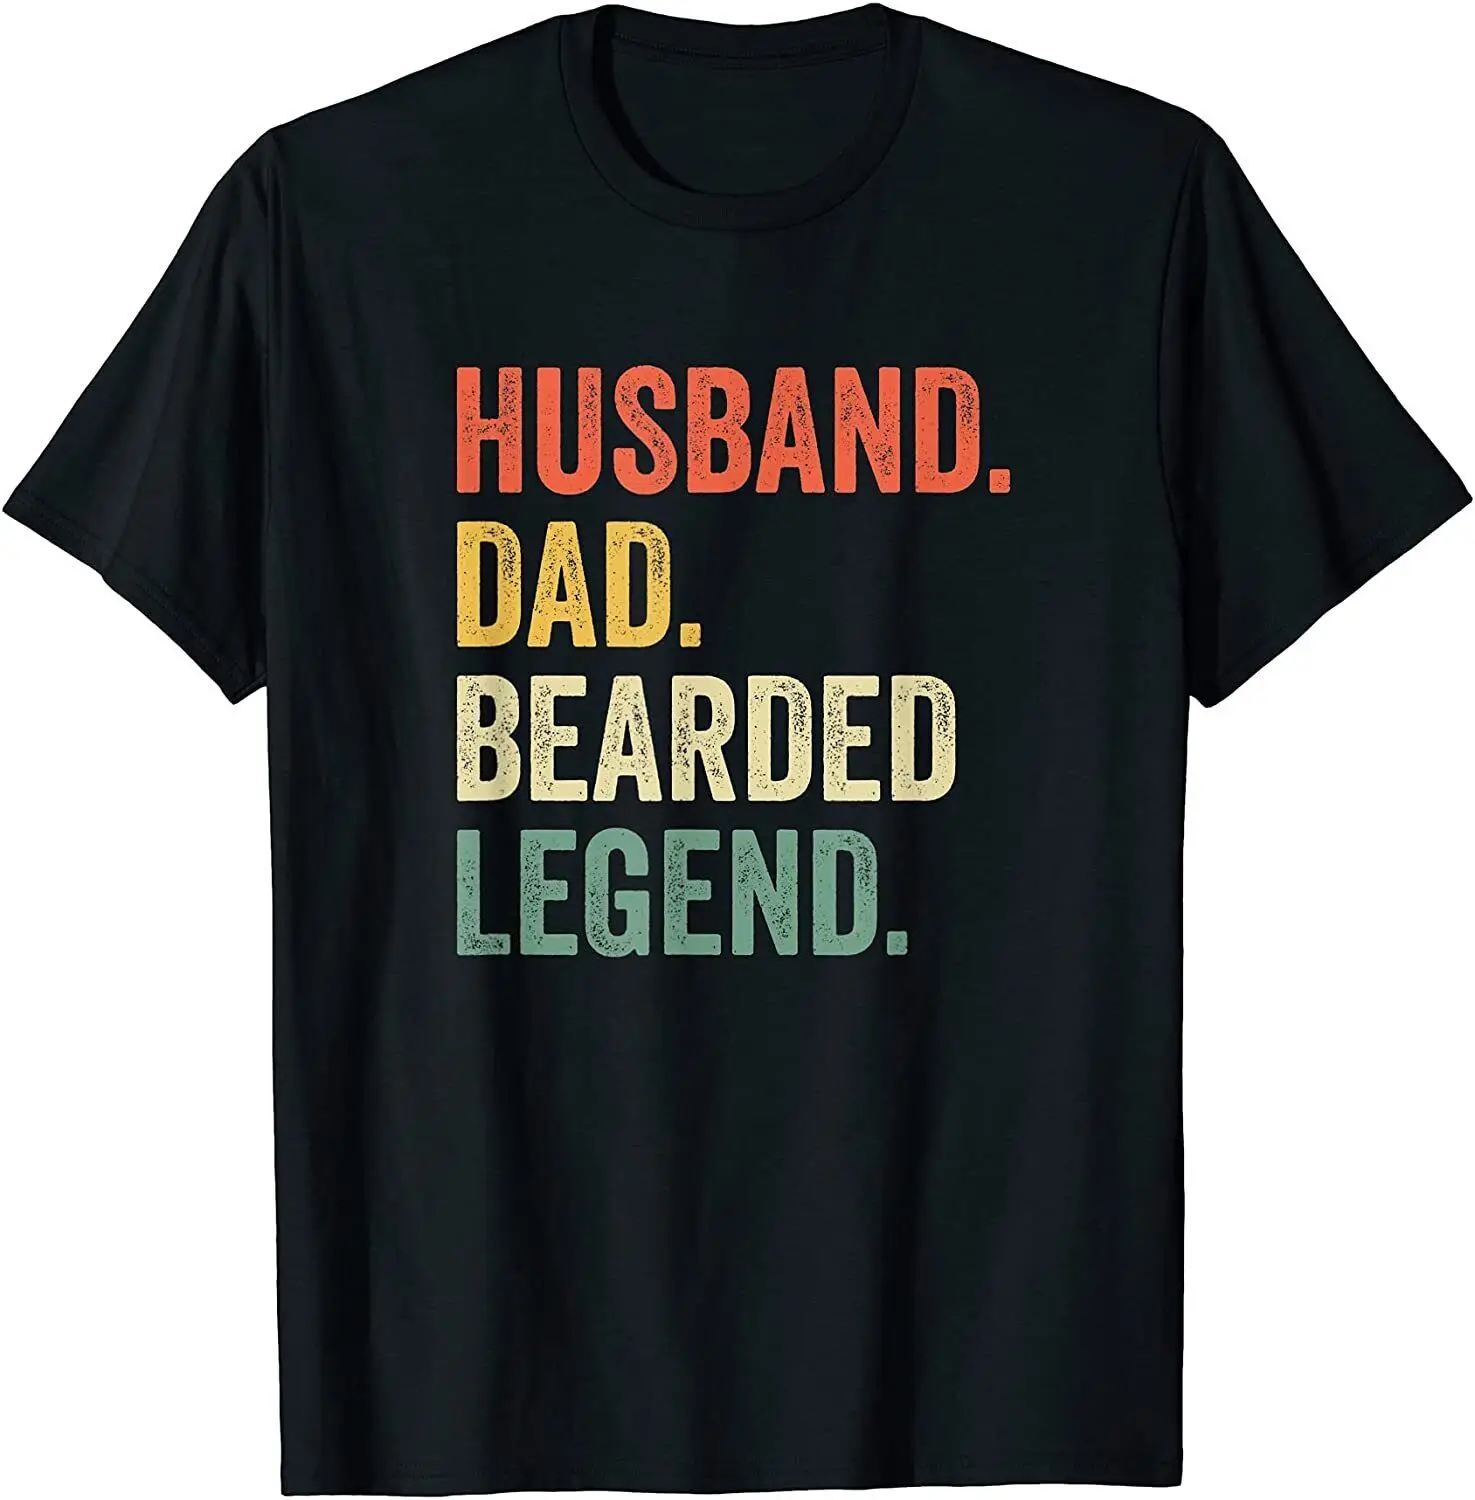 

Mens Funny Bearded Husband Dad Beard Vintage Cool Cotton T Shirt Men Casual Tees Tops Dropshipping